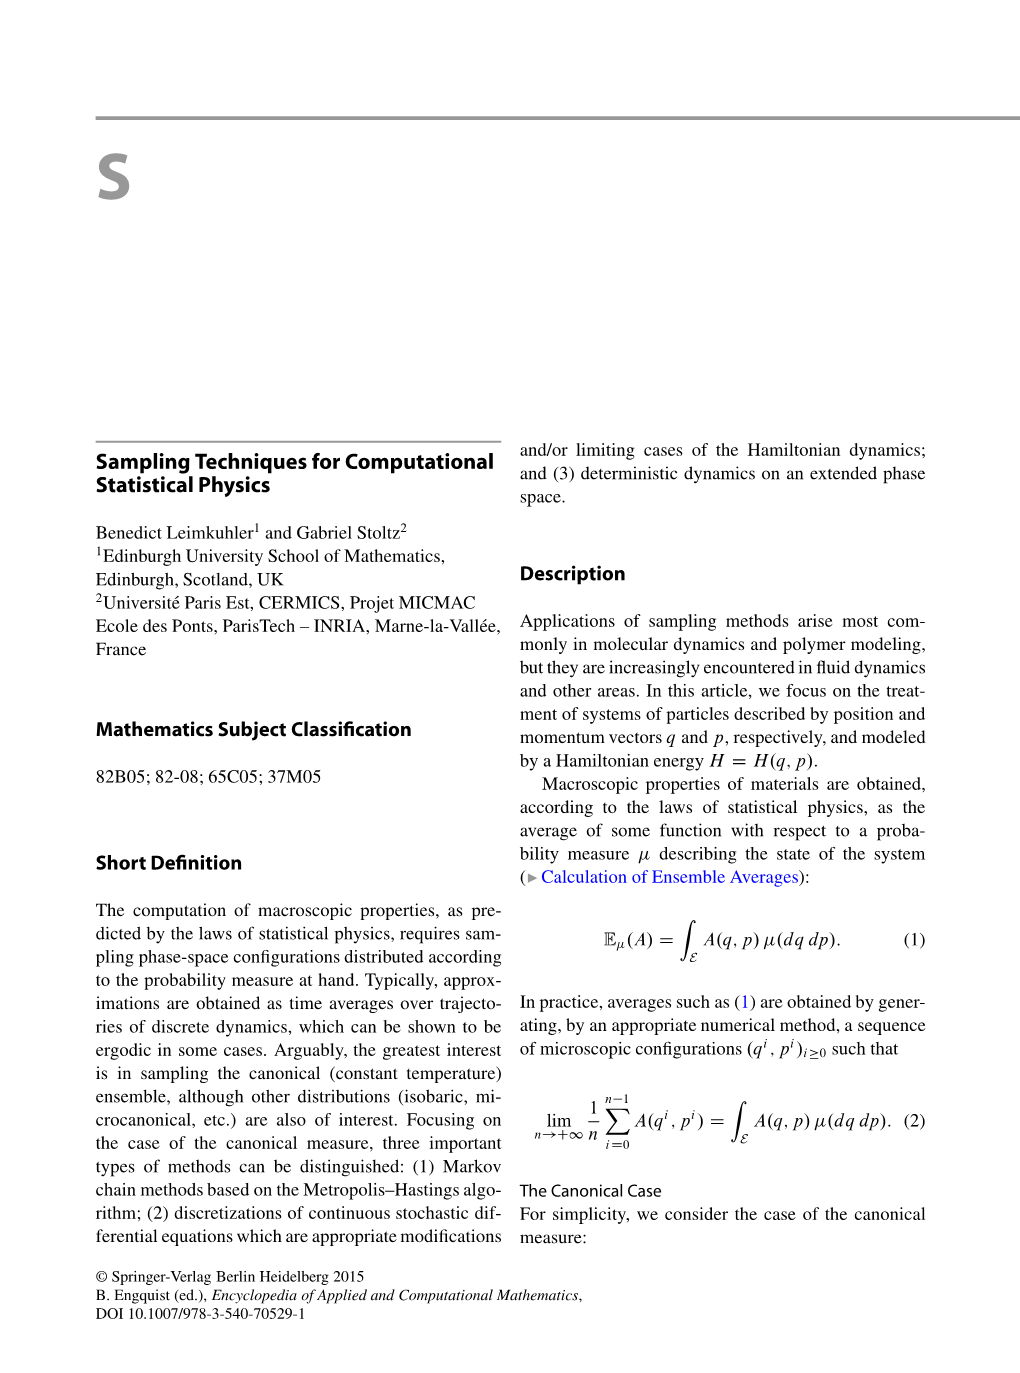 Sampling Techniques for Computational Statistical Physics